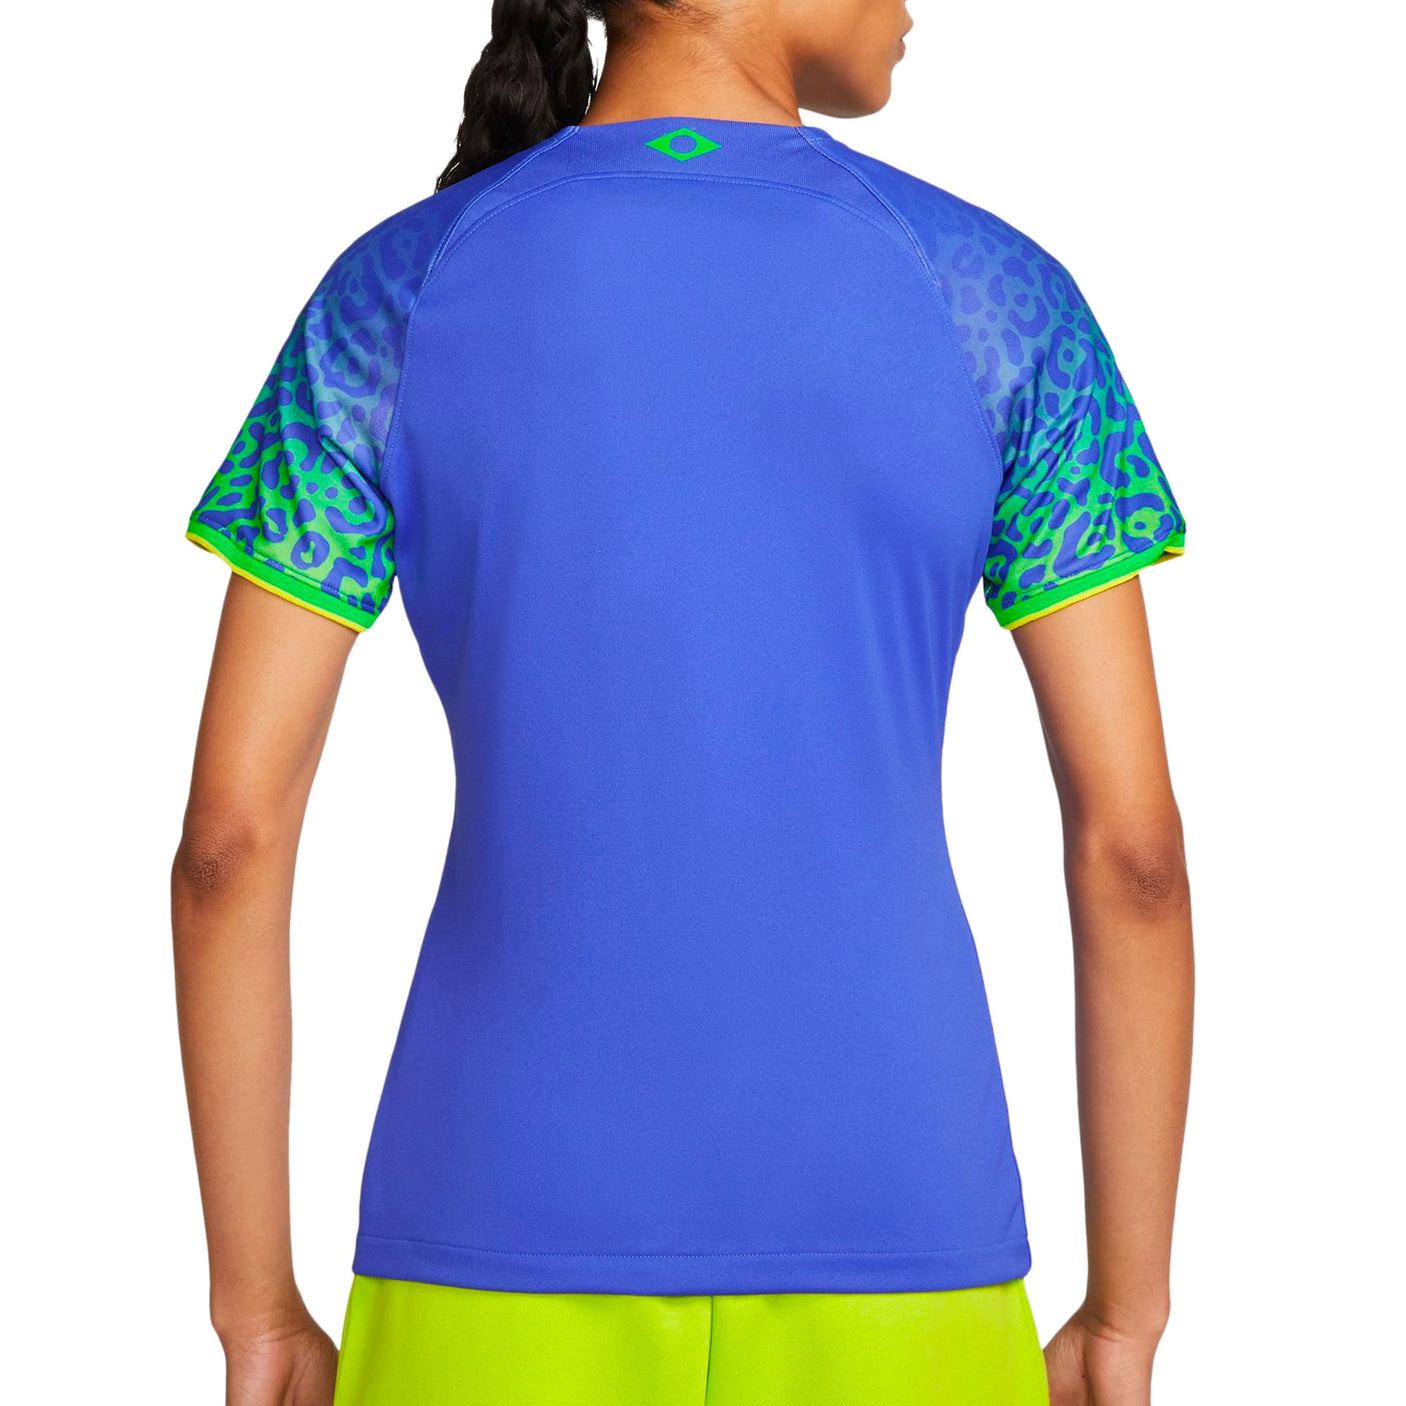 Nike Women's Brazil 2023/24 Away Jersey Blue/Green - XS